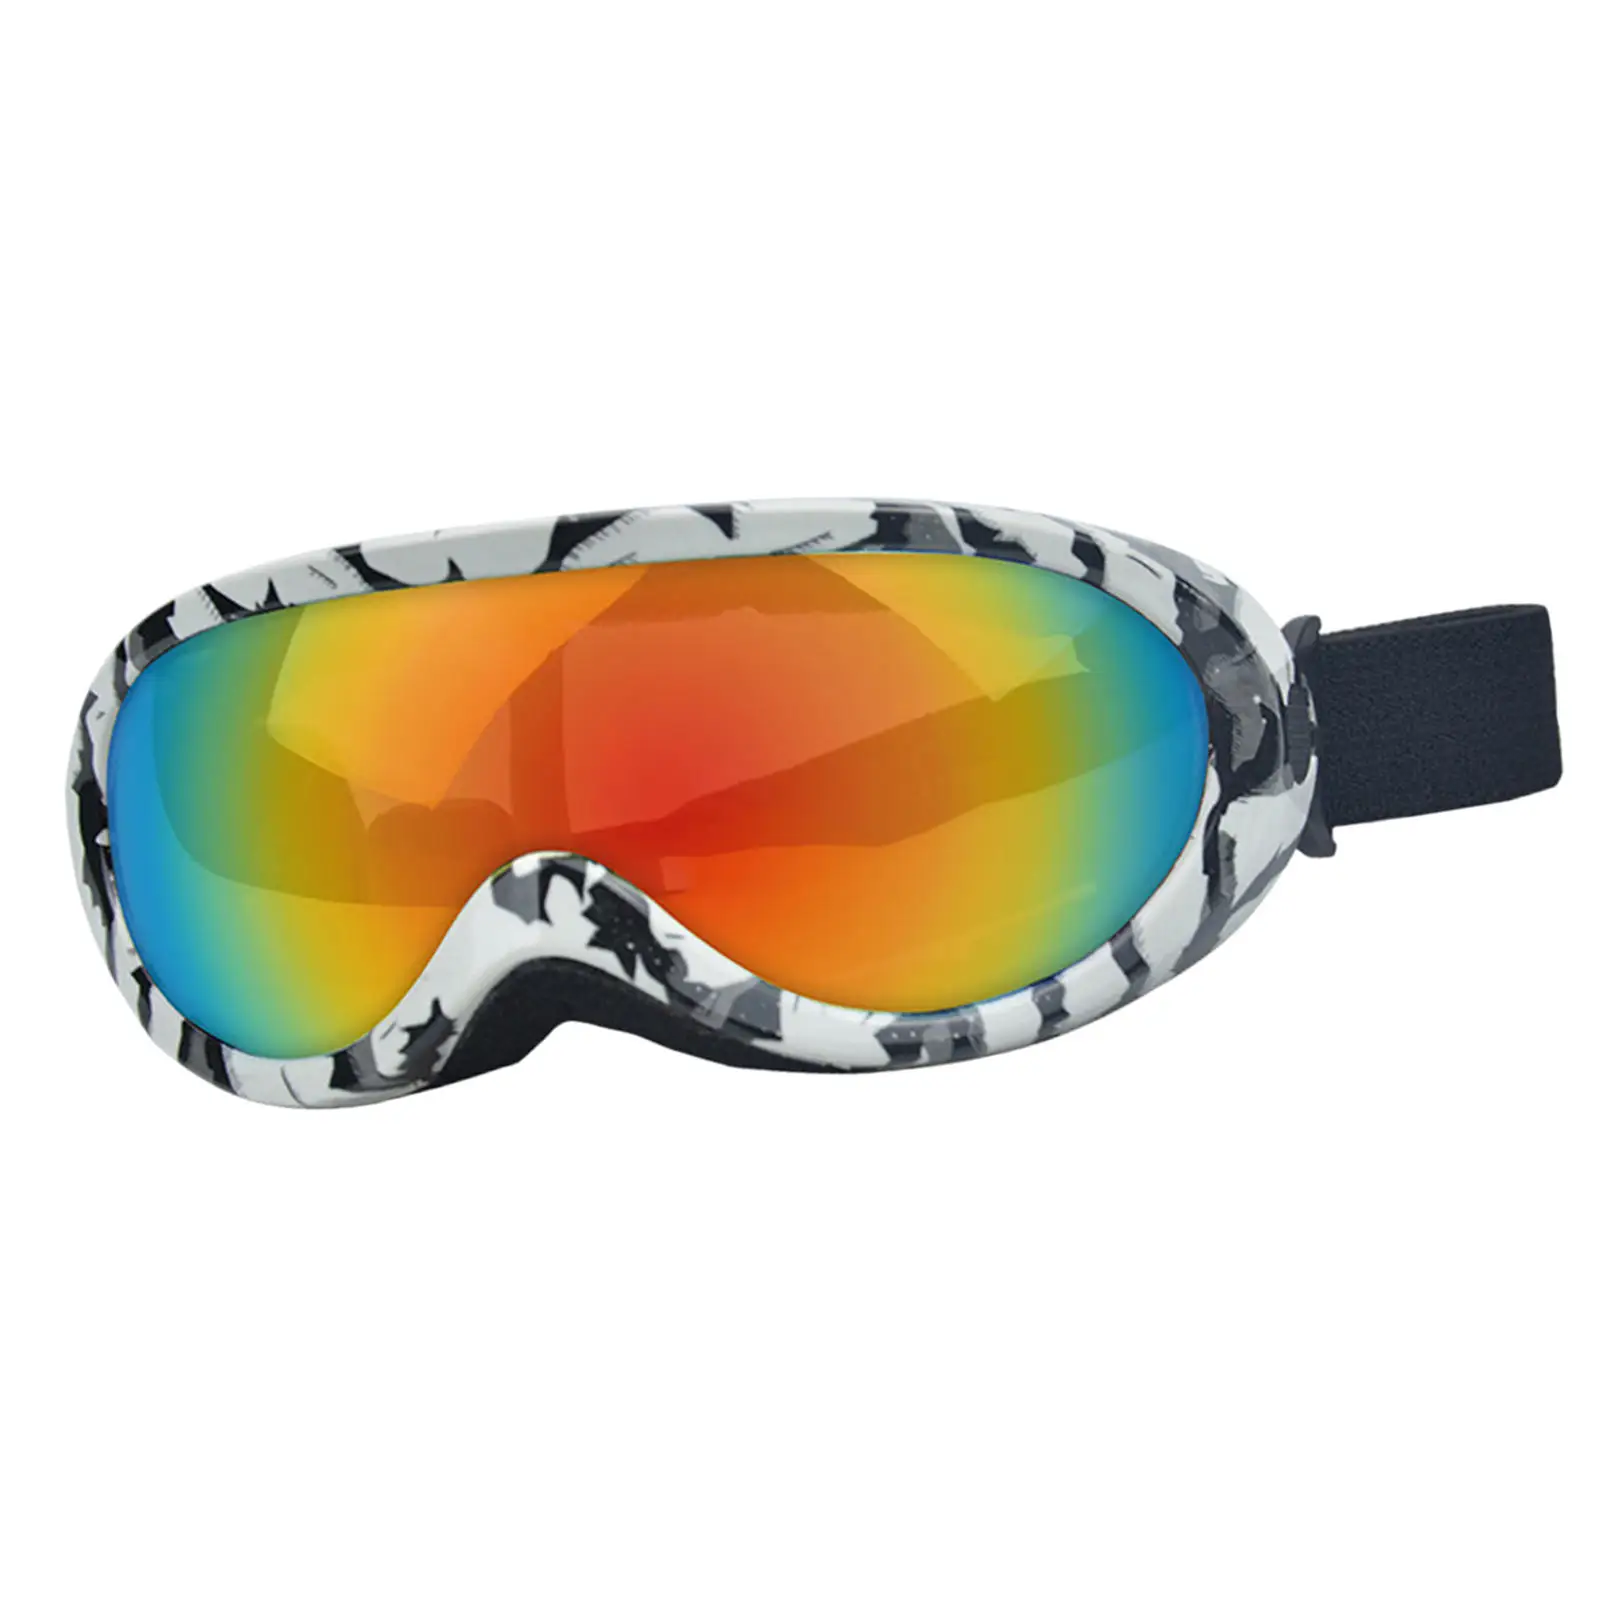 Unisex Anti Fog Outdoor Winter Ski Snowmobile Safety Goggles Racing Running Eyeglasses Eyewear Eye Protective